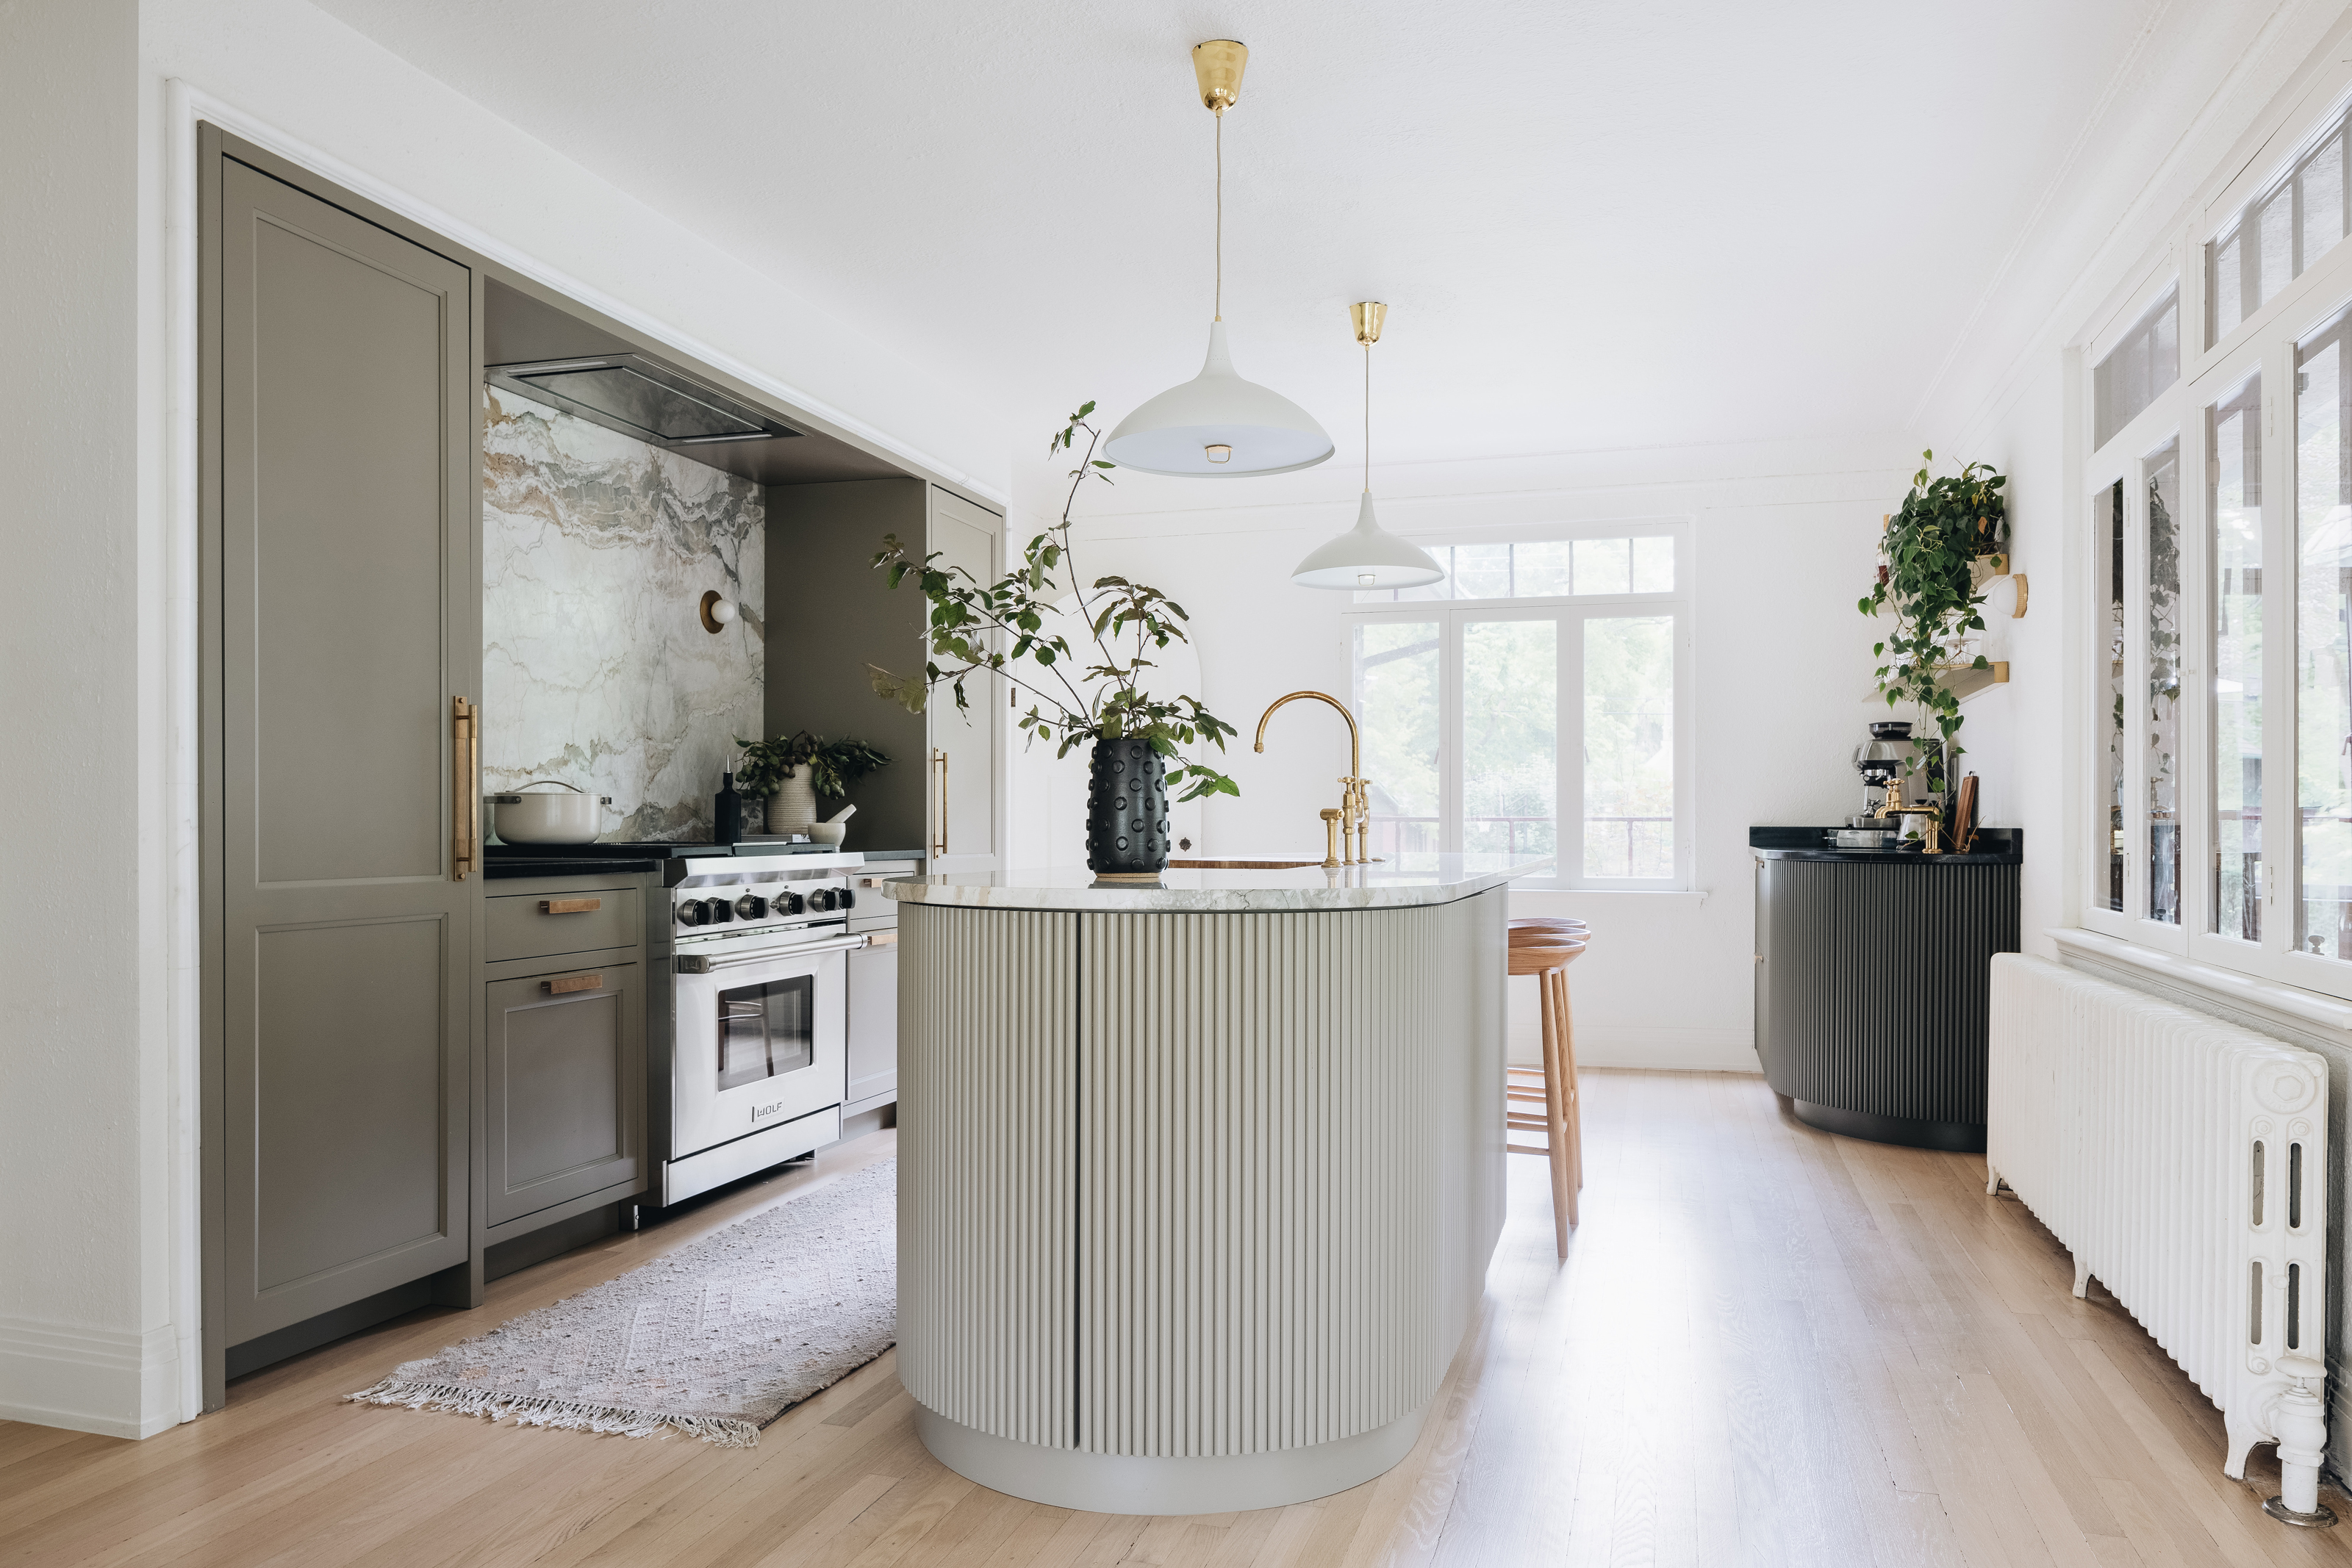 Modern kitchen ideas – 20 ways to remodel your home's design ...